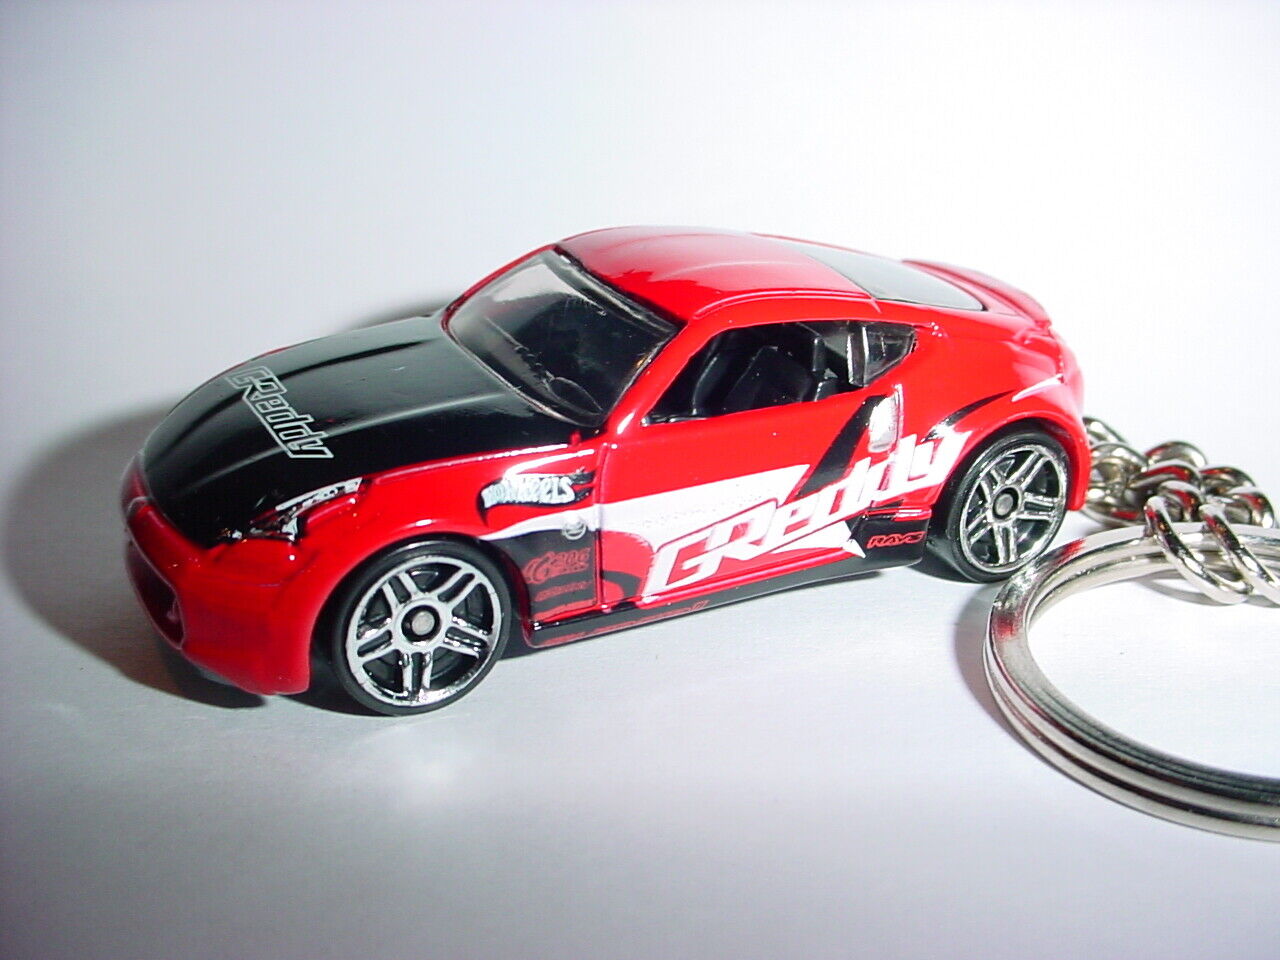 HOT 3D RED NISSAN 370Z CUSTOM KEYCHAIN keyring ornament BLING racing Hot Wheels